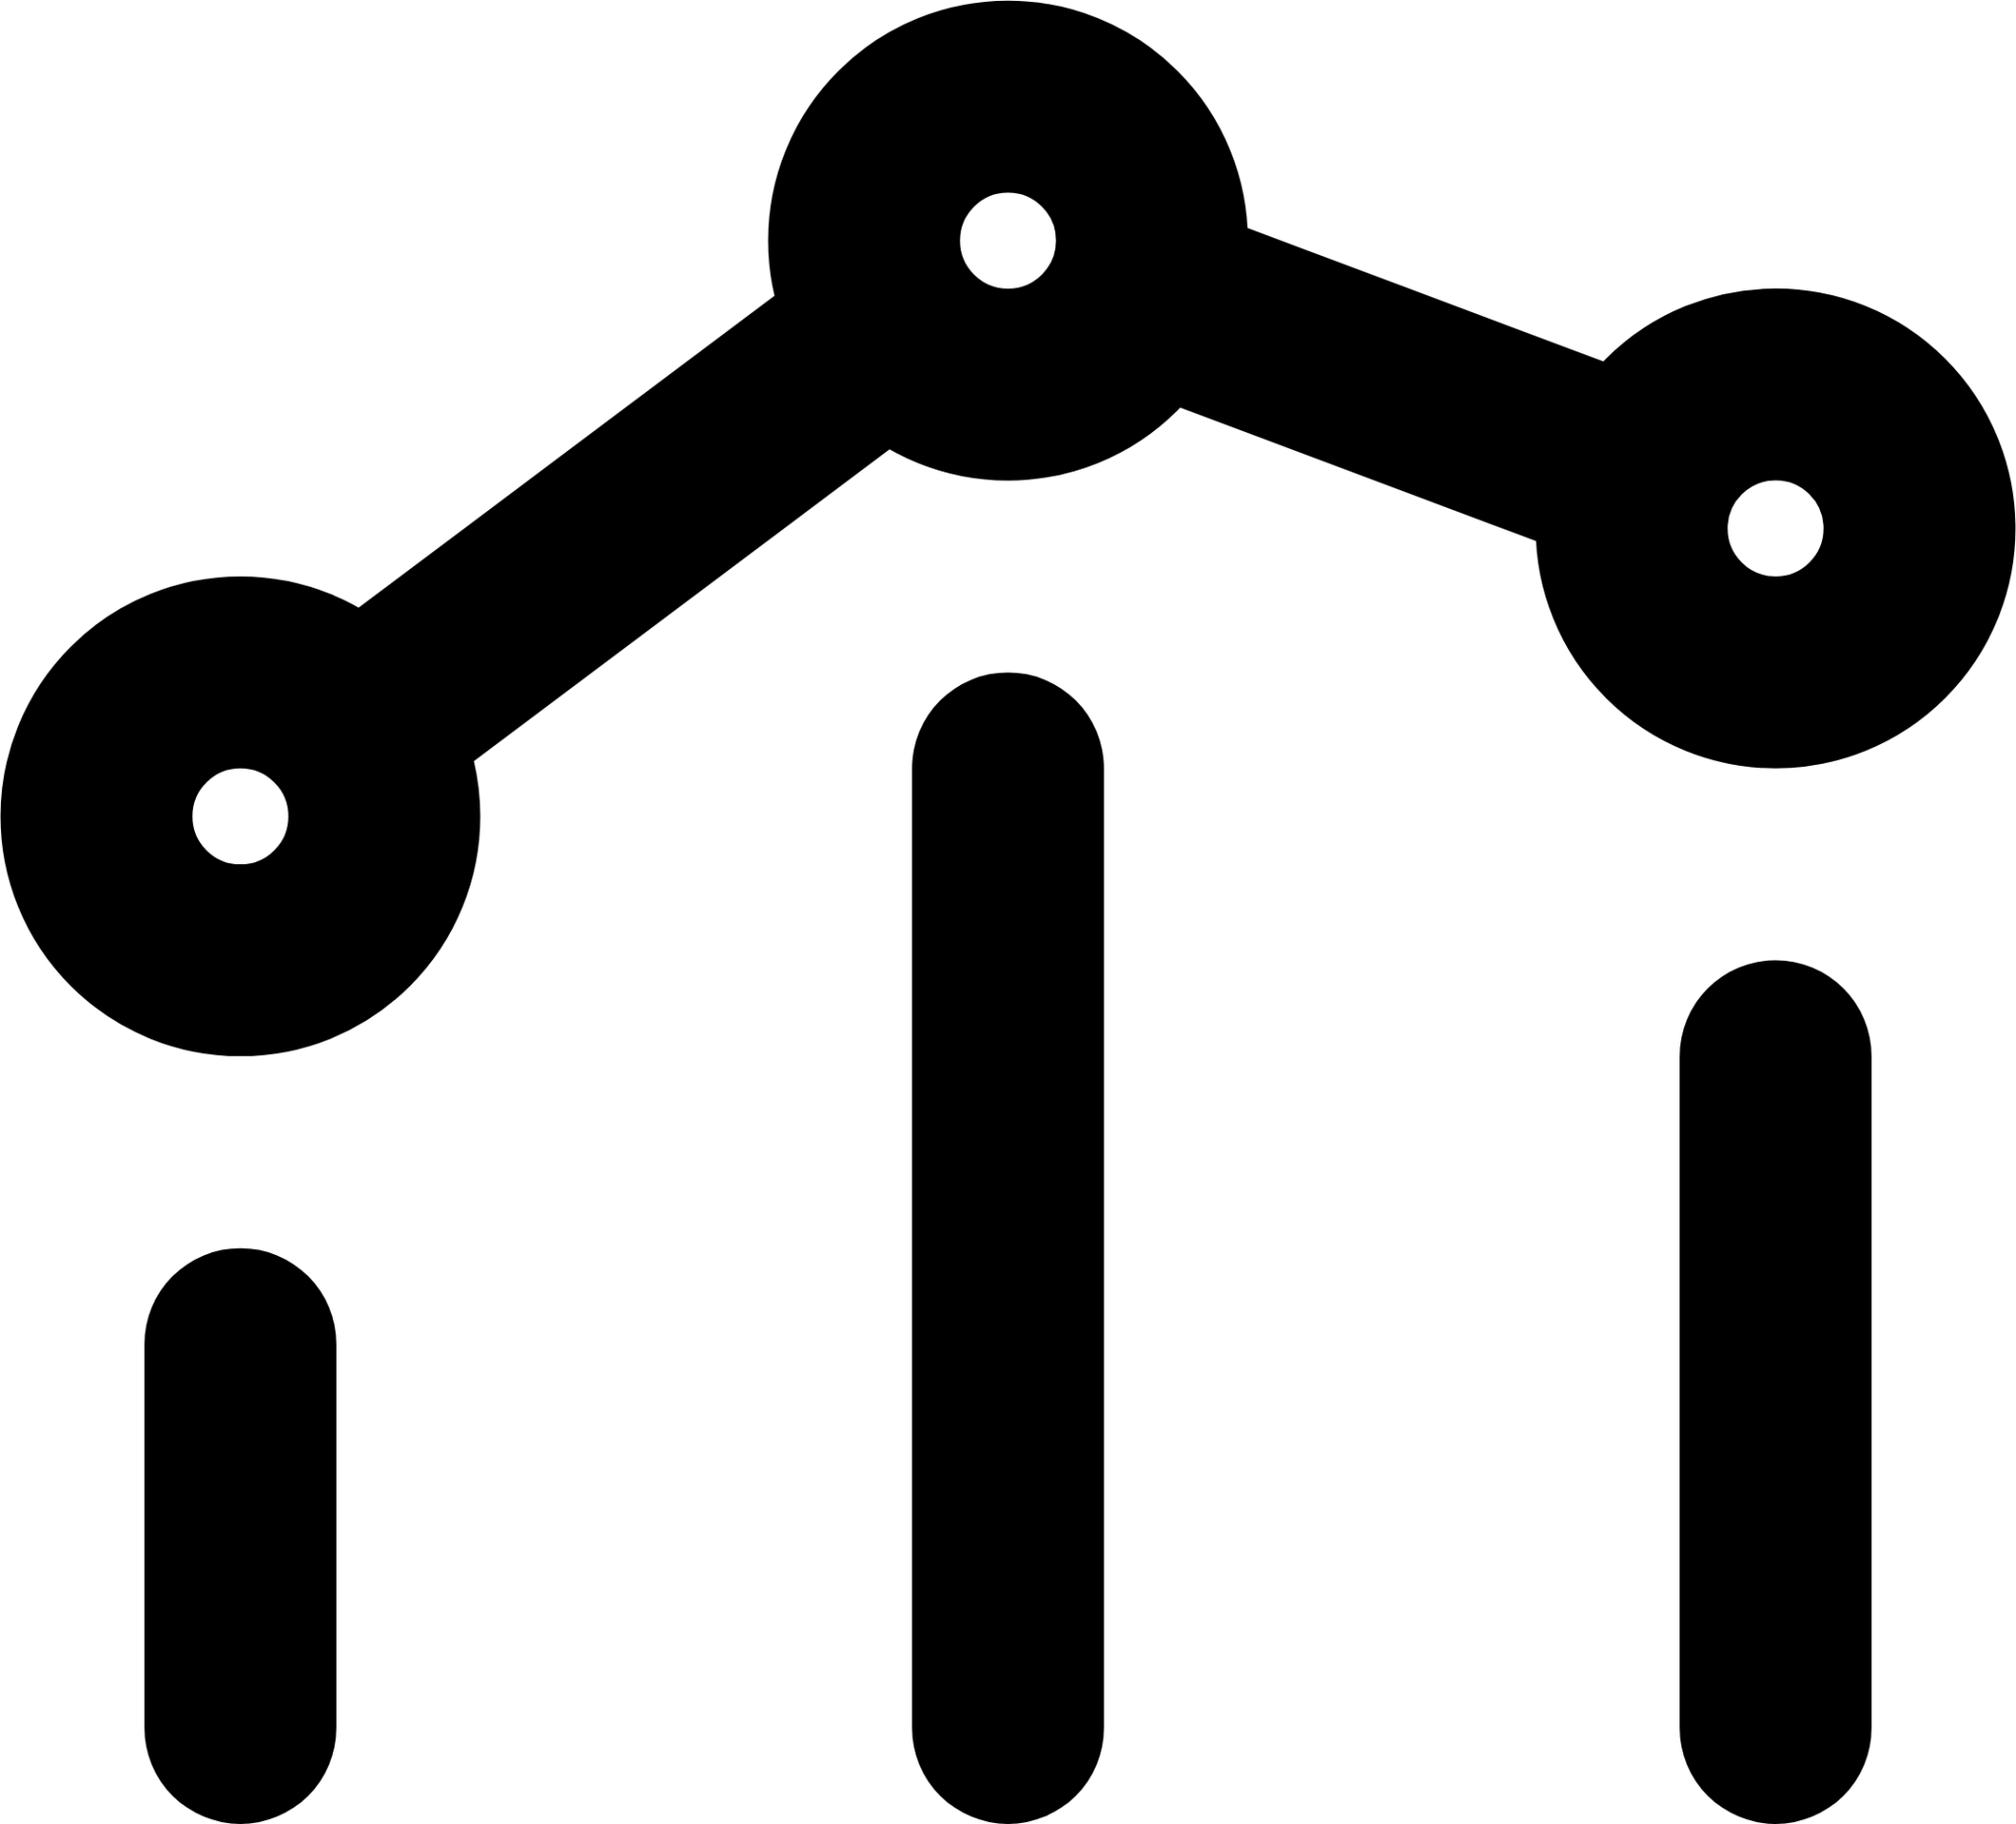 bar line chart icon